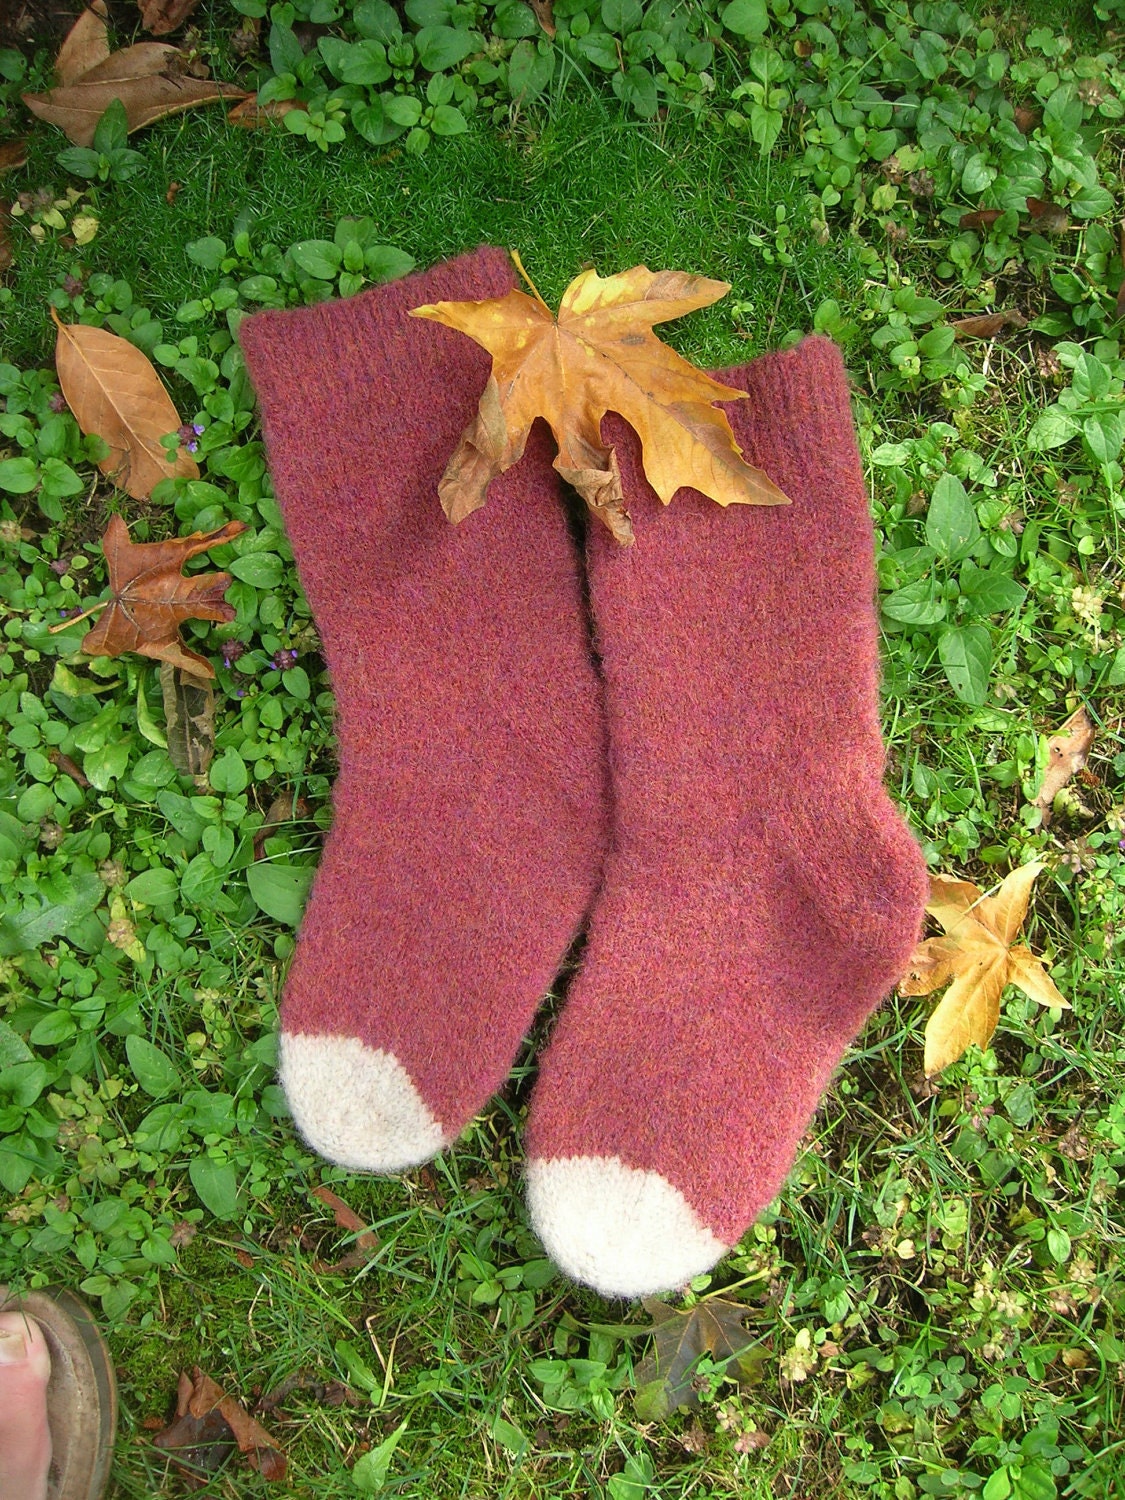 Socks  Wool  Hand Knit Socks - Slippers  100% Wool  Autumn Colors